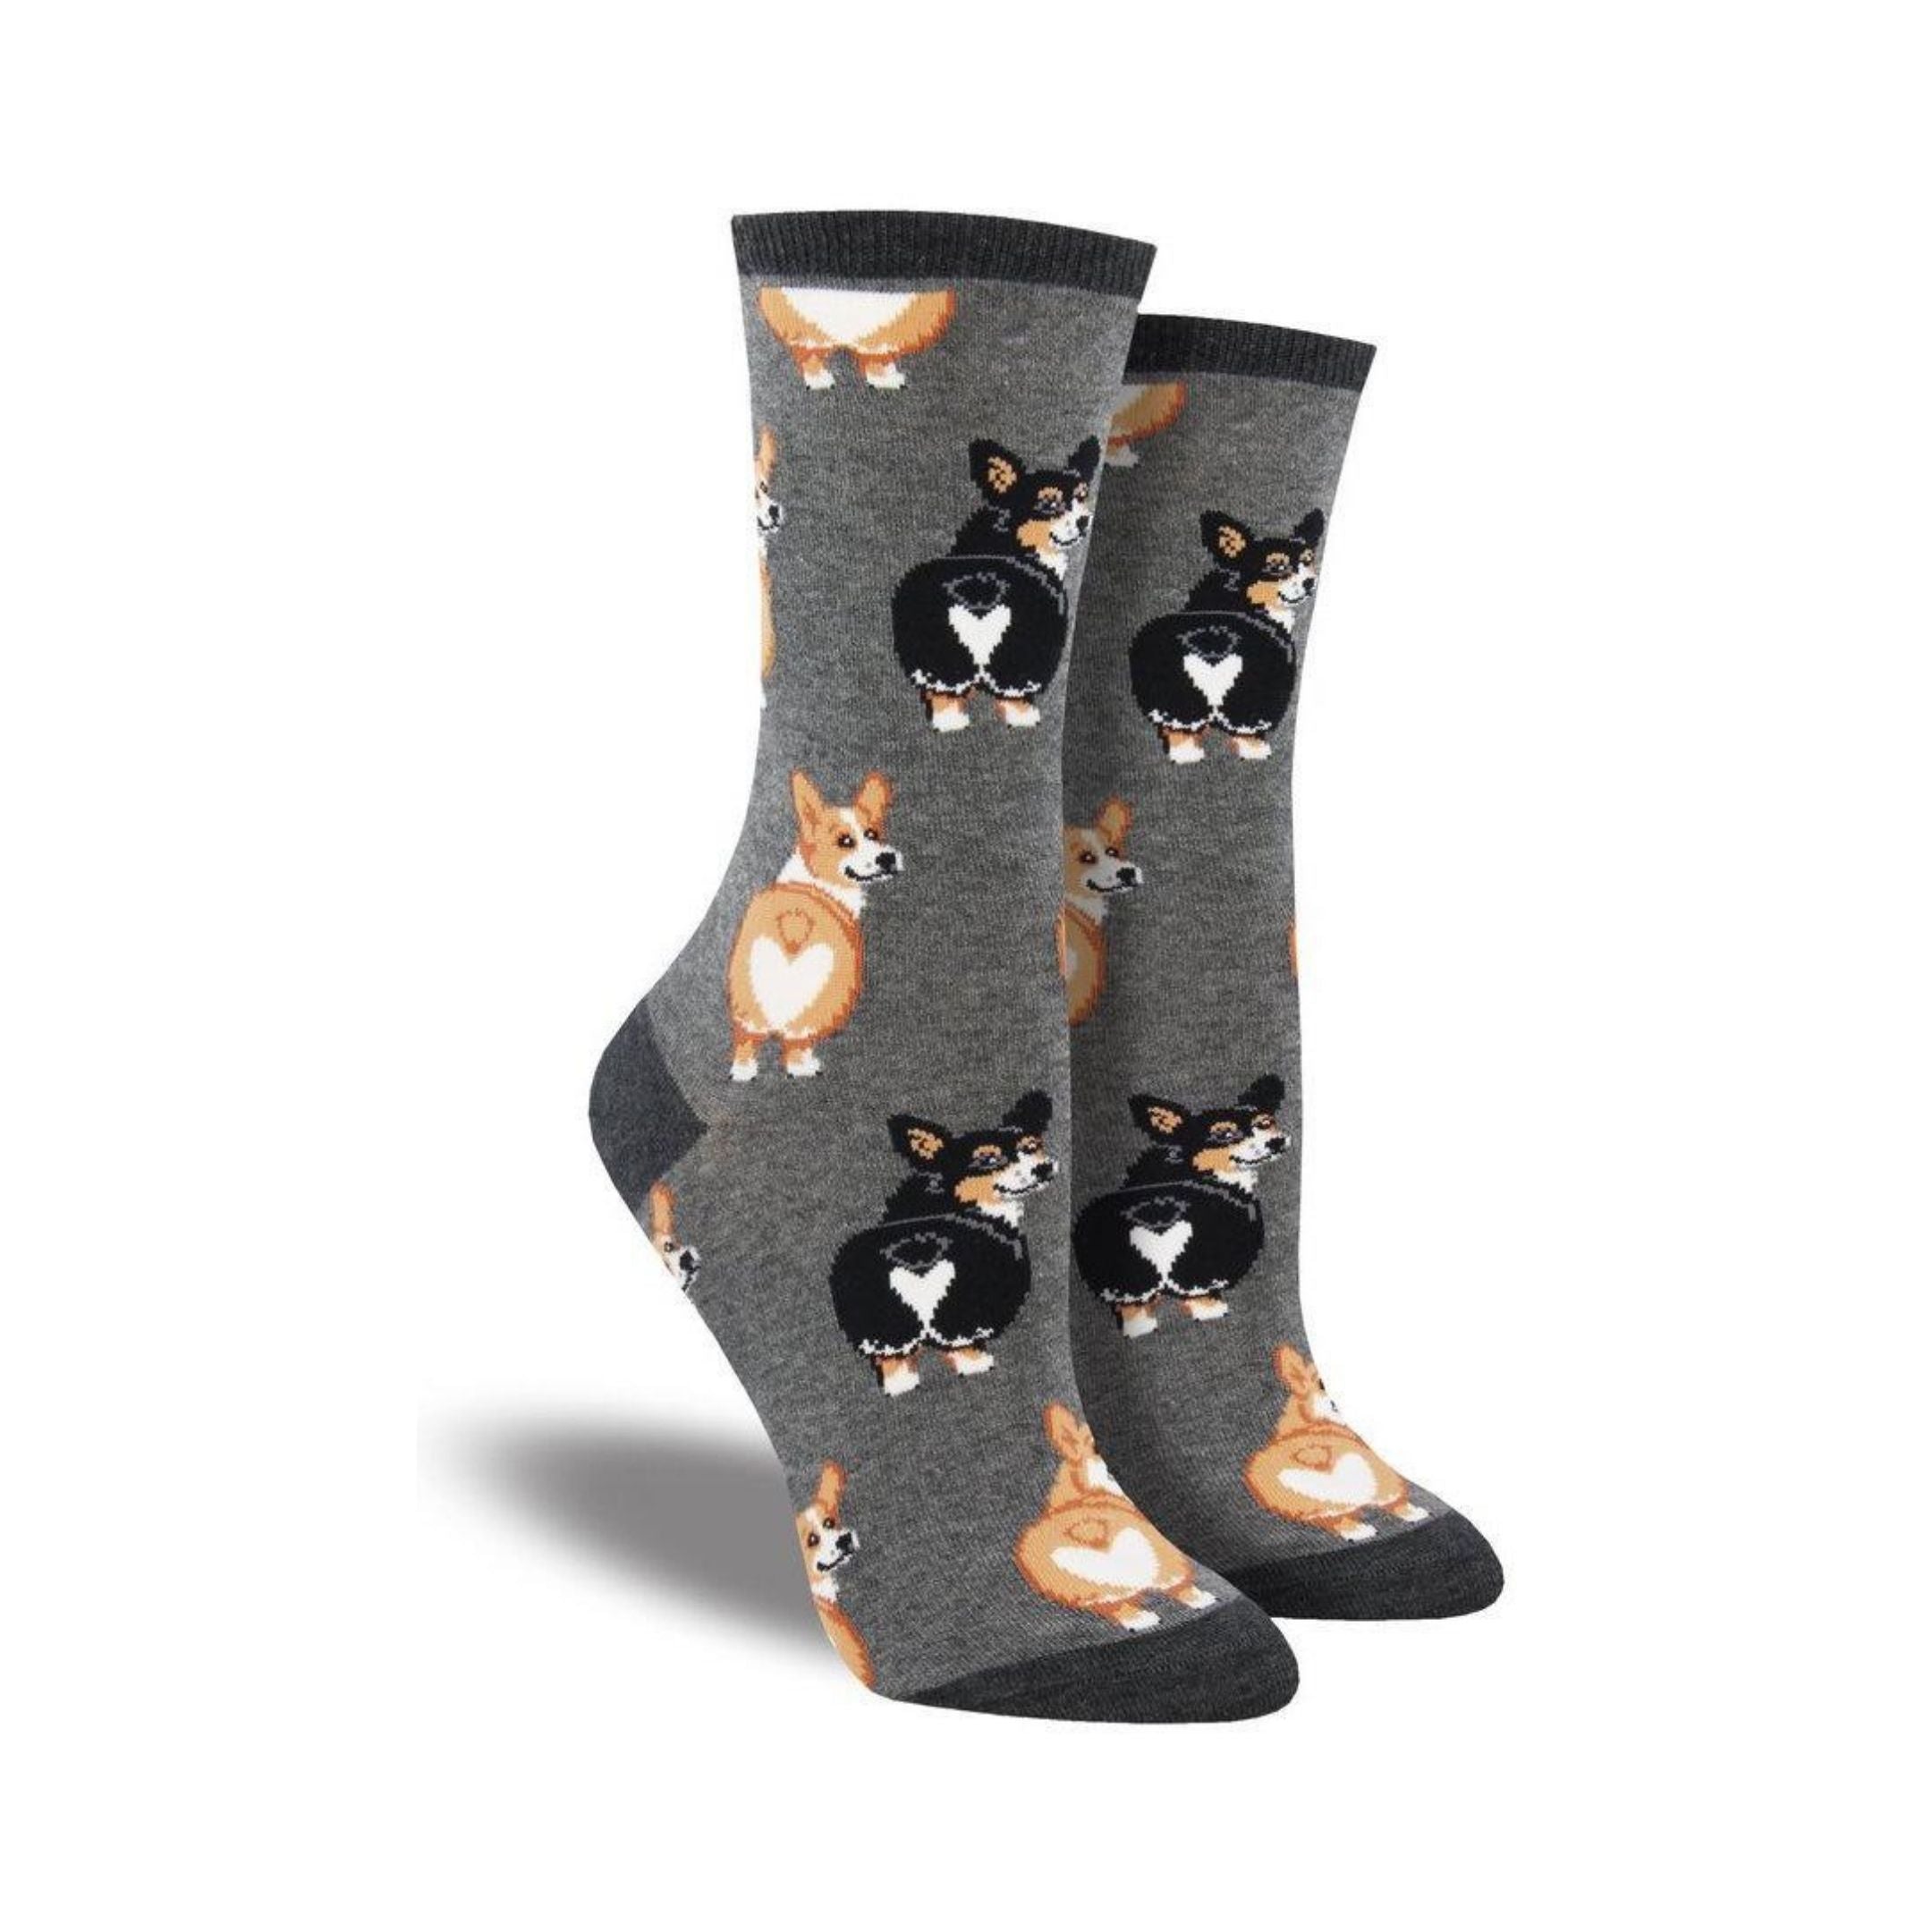 Grey socks with beige and black corgi dog butts